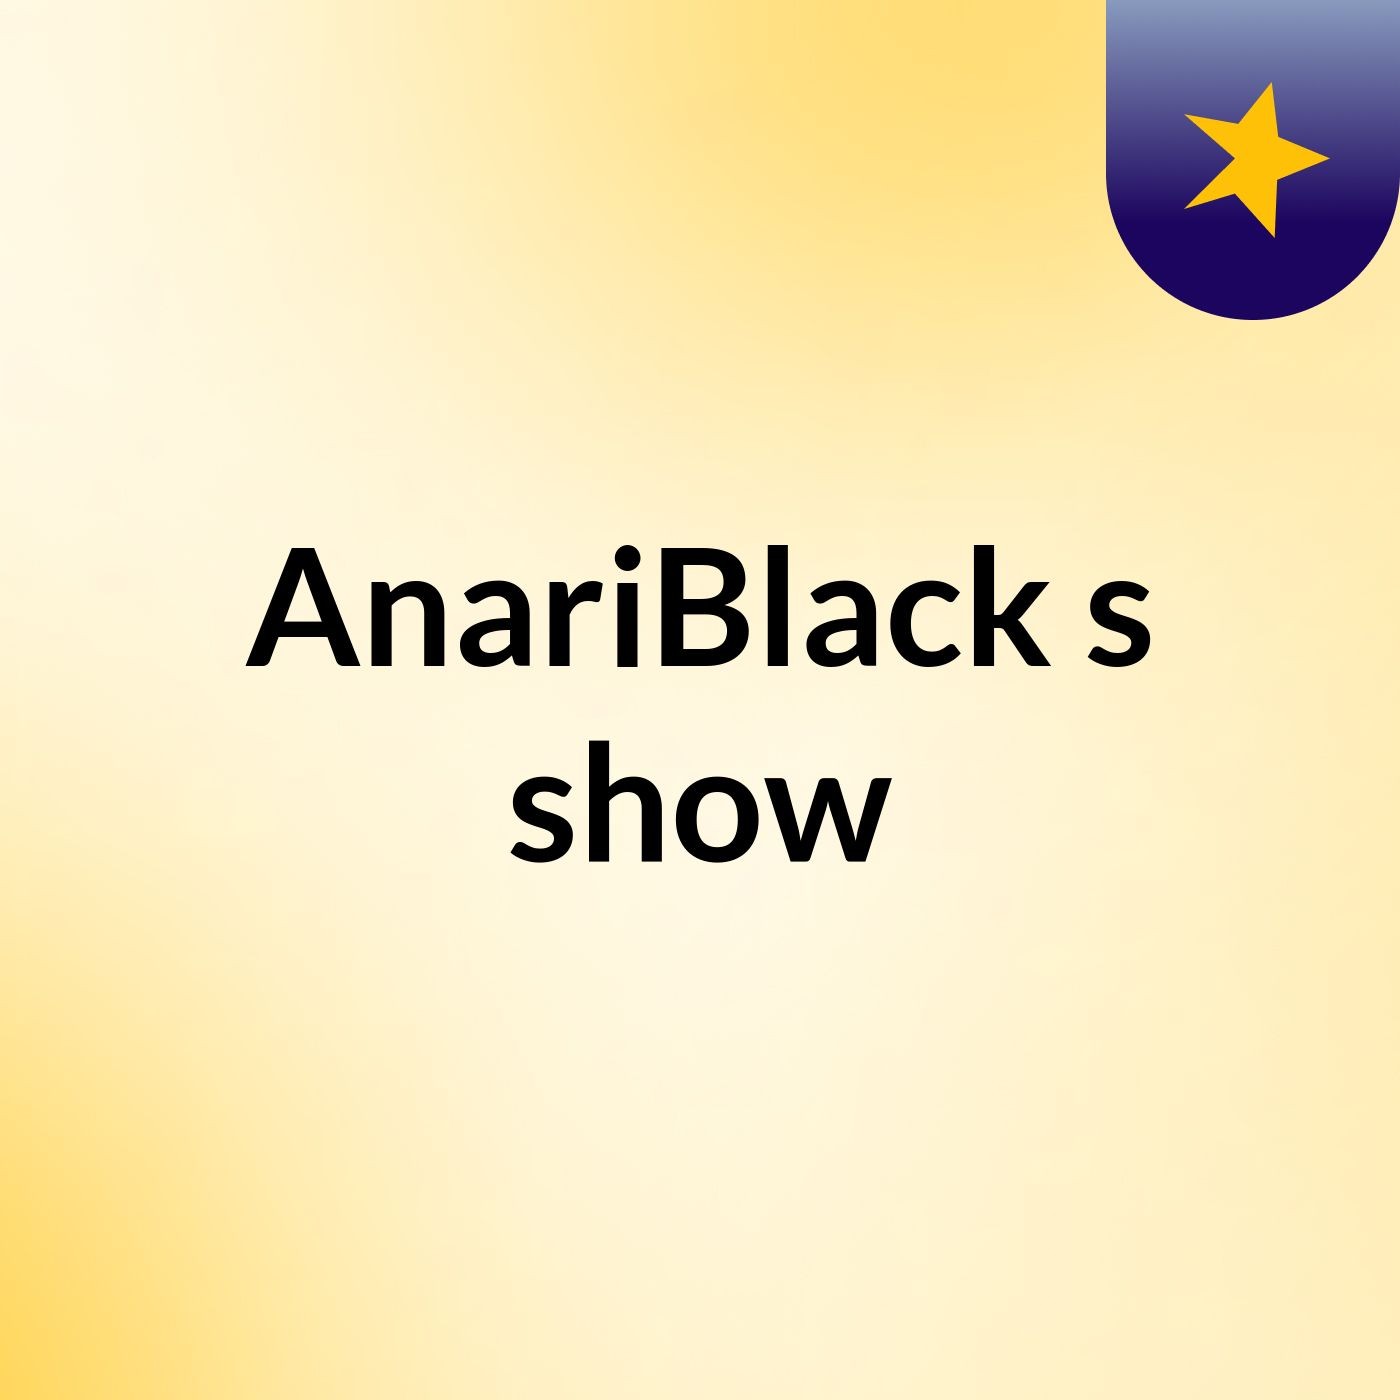 AnariBlack's show